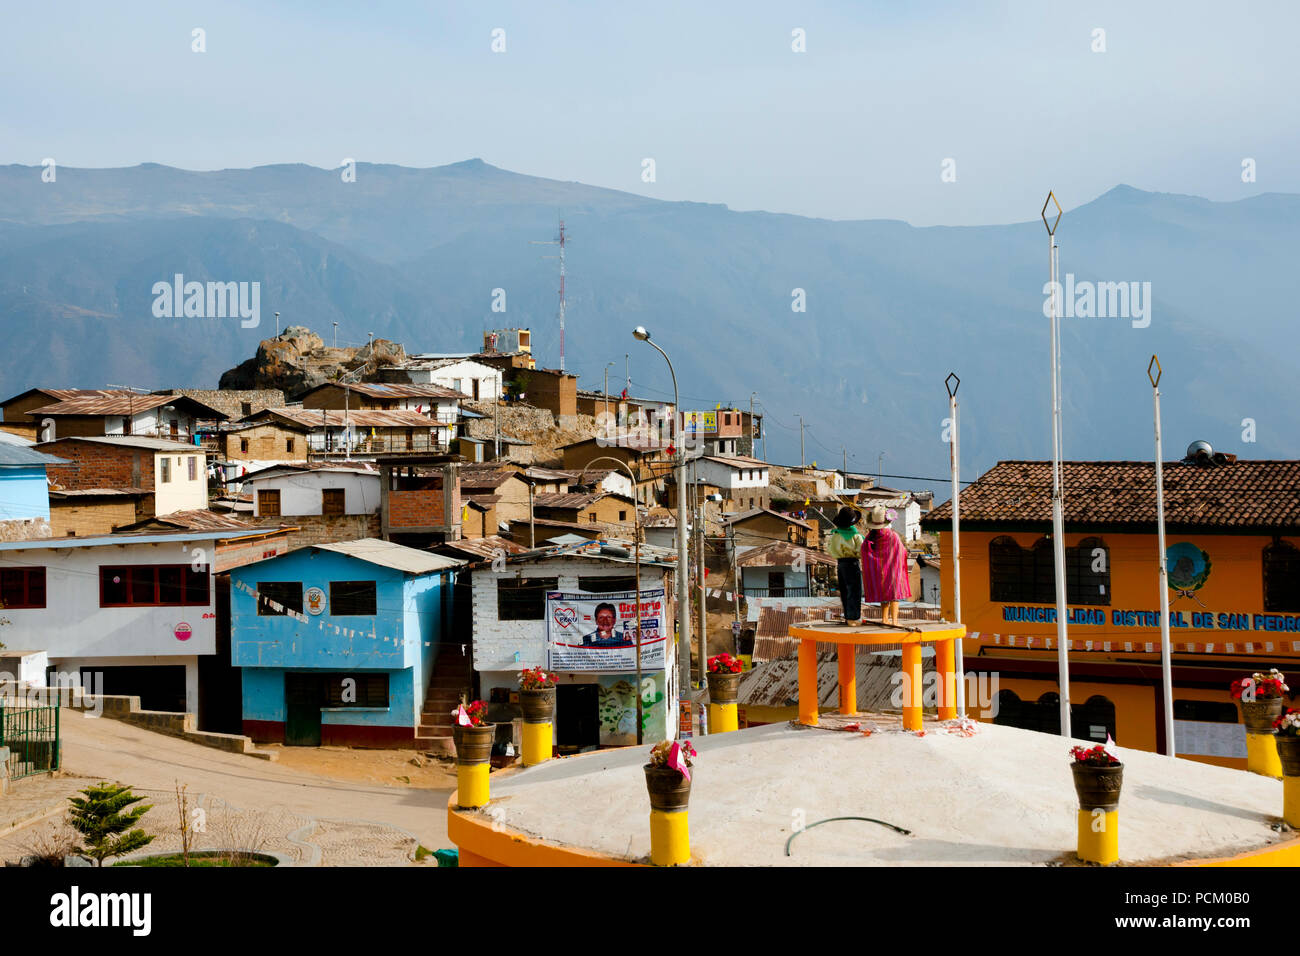 SAN PEDRO DE CASTA, PERU - September 18, 2014: High altitude Andes village in proximity to Marcahuasi stone forest Stock Photo